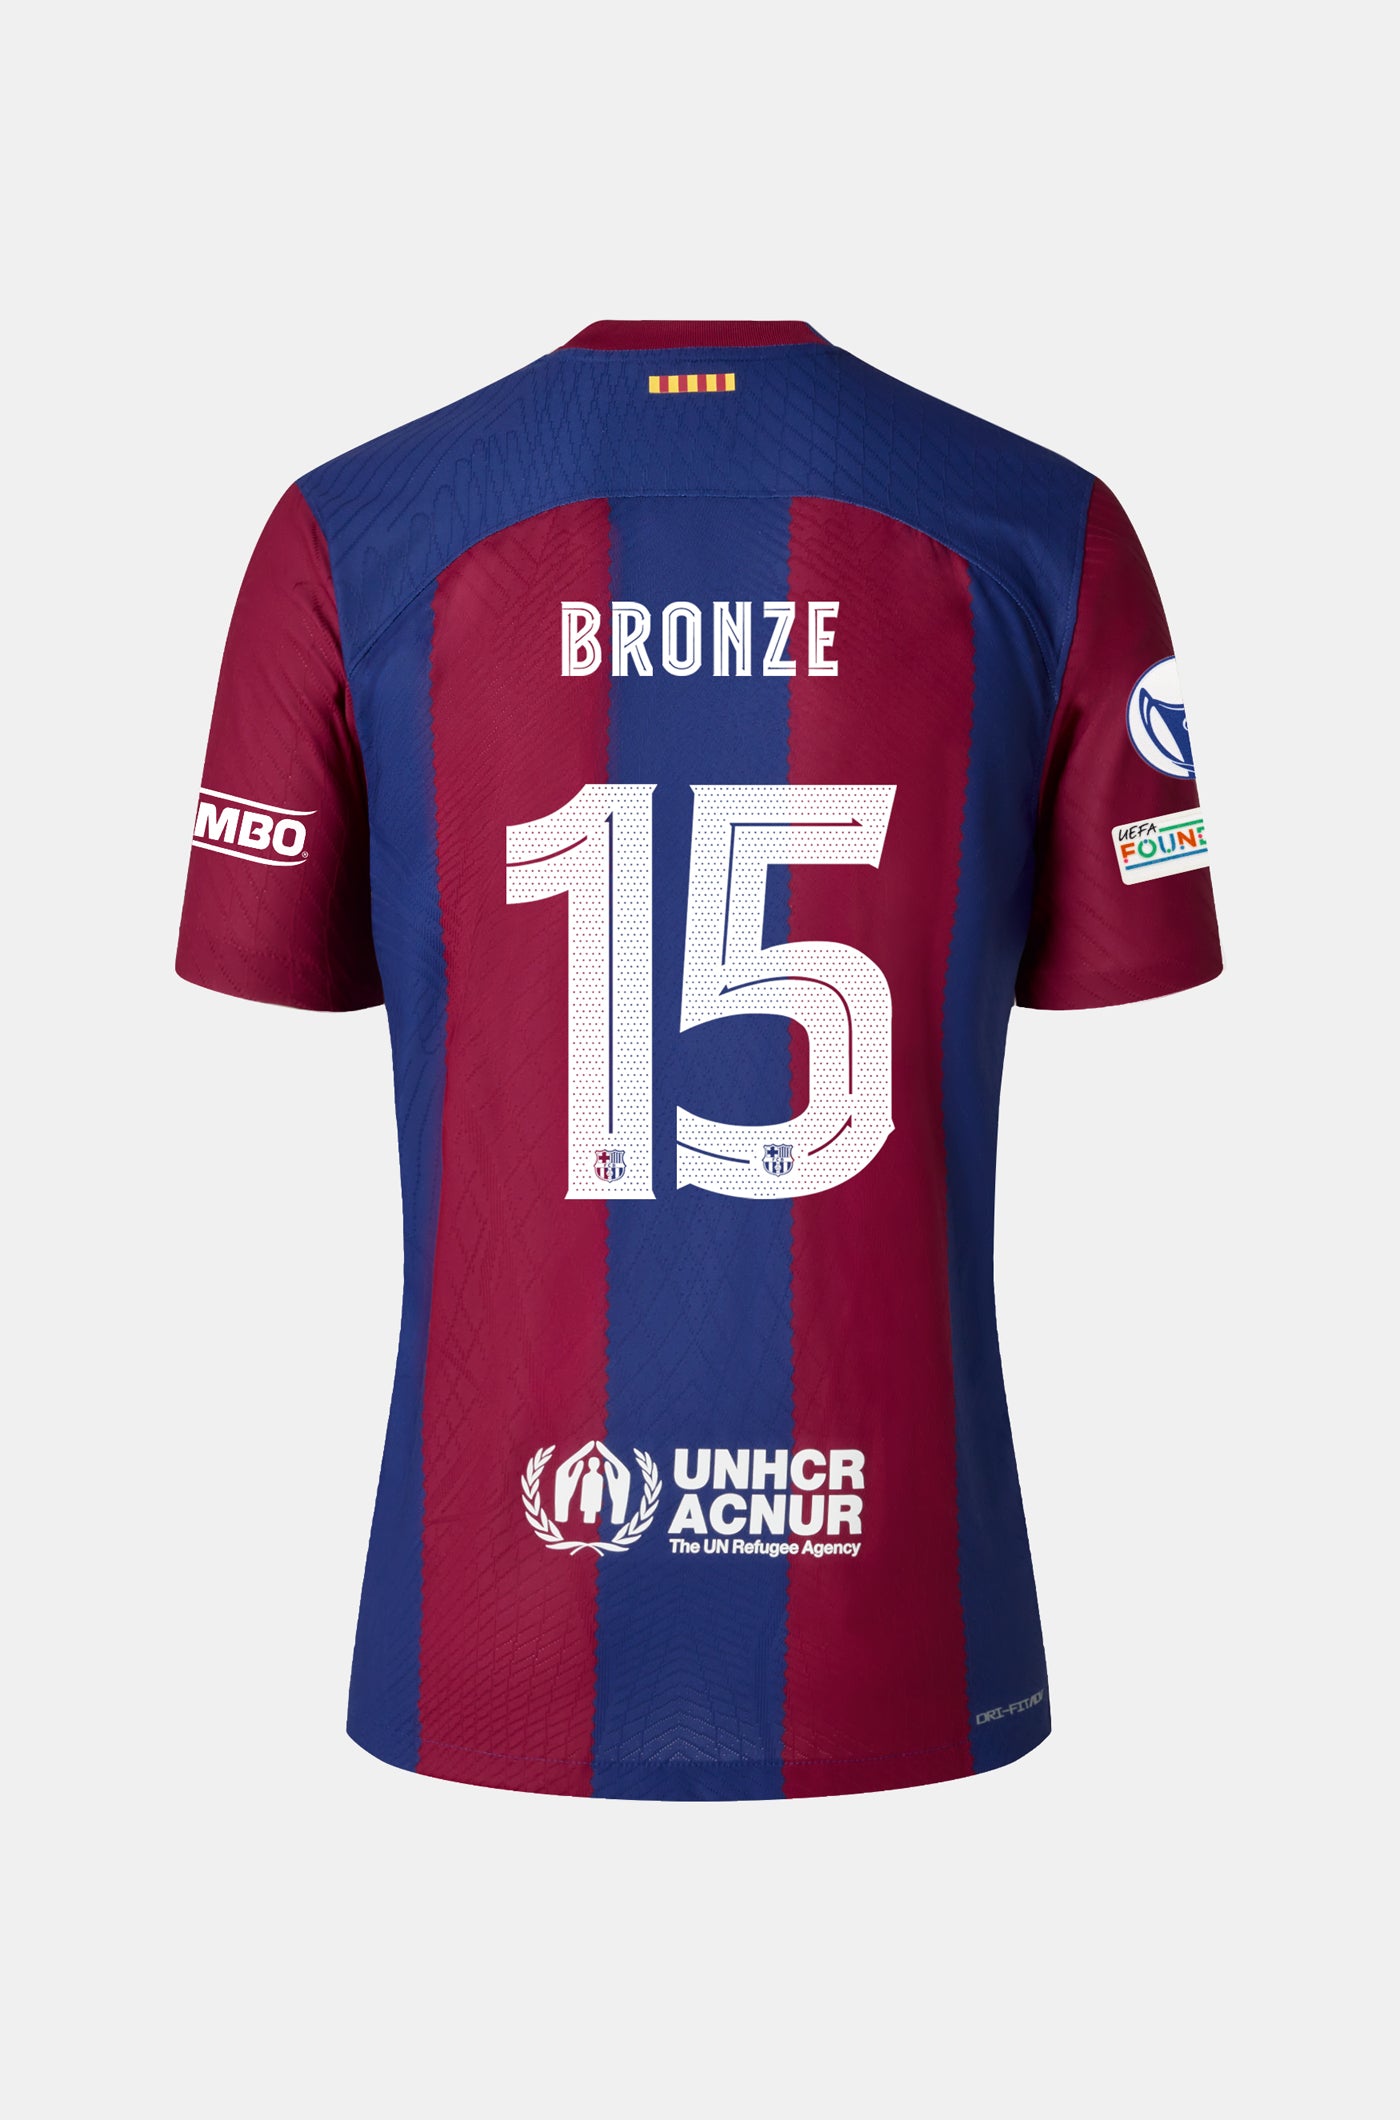 UWCL FC Barcelona Home Shirt 23/24 Player's Edition - Women - BRONZE